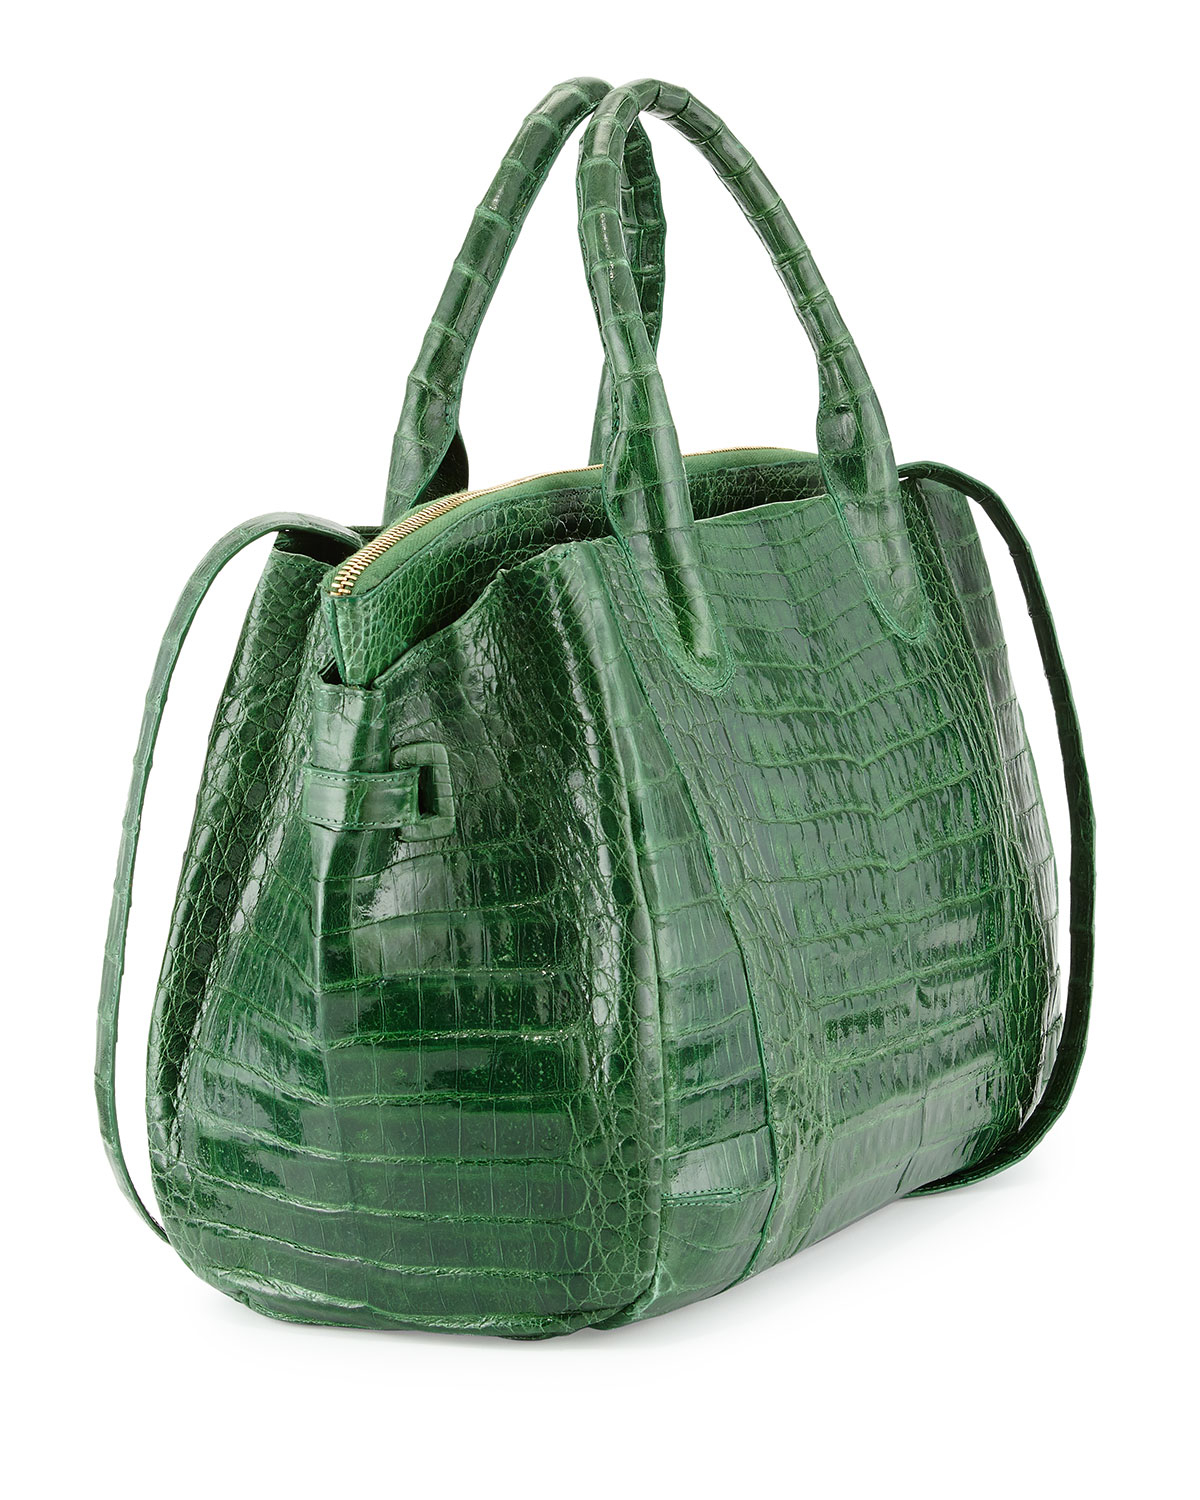 Nancy gonzalez Medium Crocodile Tote Bag in Green | Lyst